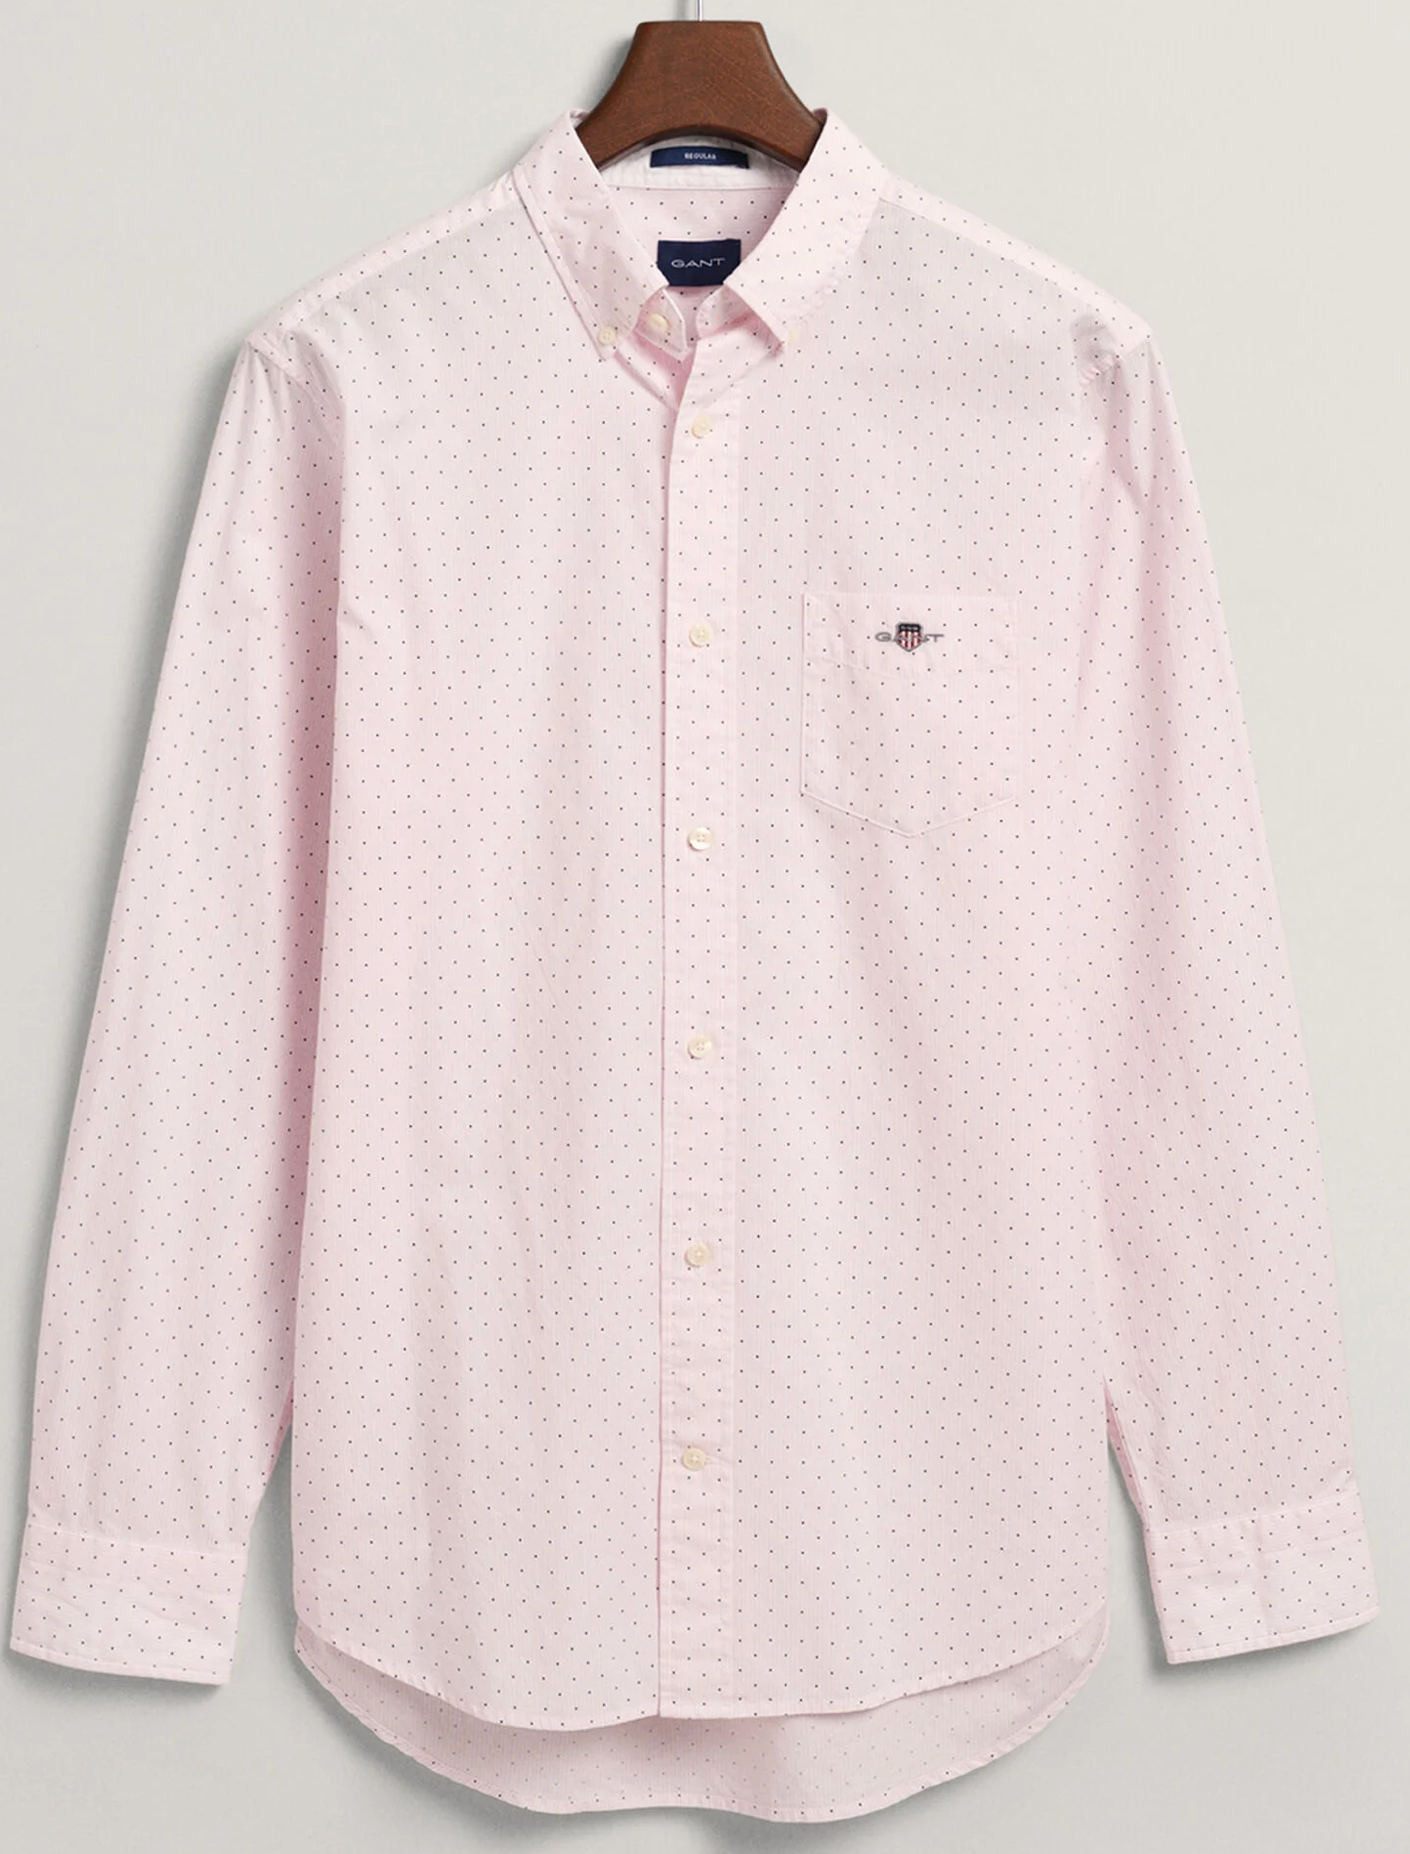 Gant "Banker Dot" Shirt Pink